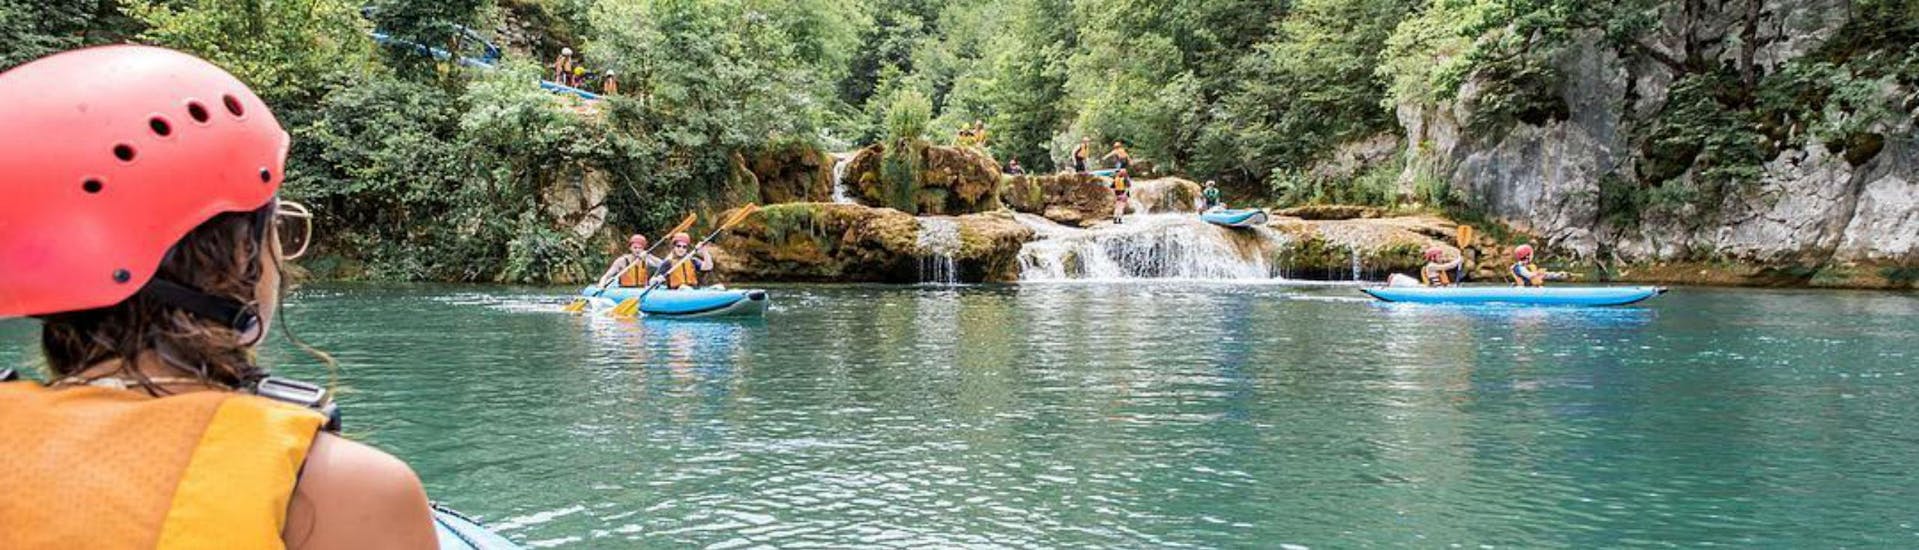 People on Classic Kayaking on the Mreznica River with Raftrek Adventure Travel Croatia.